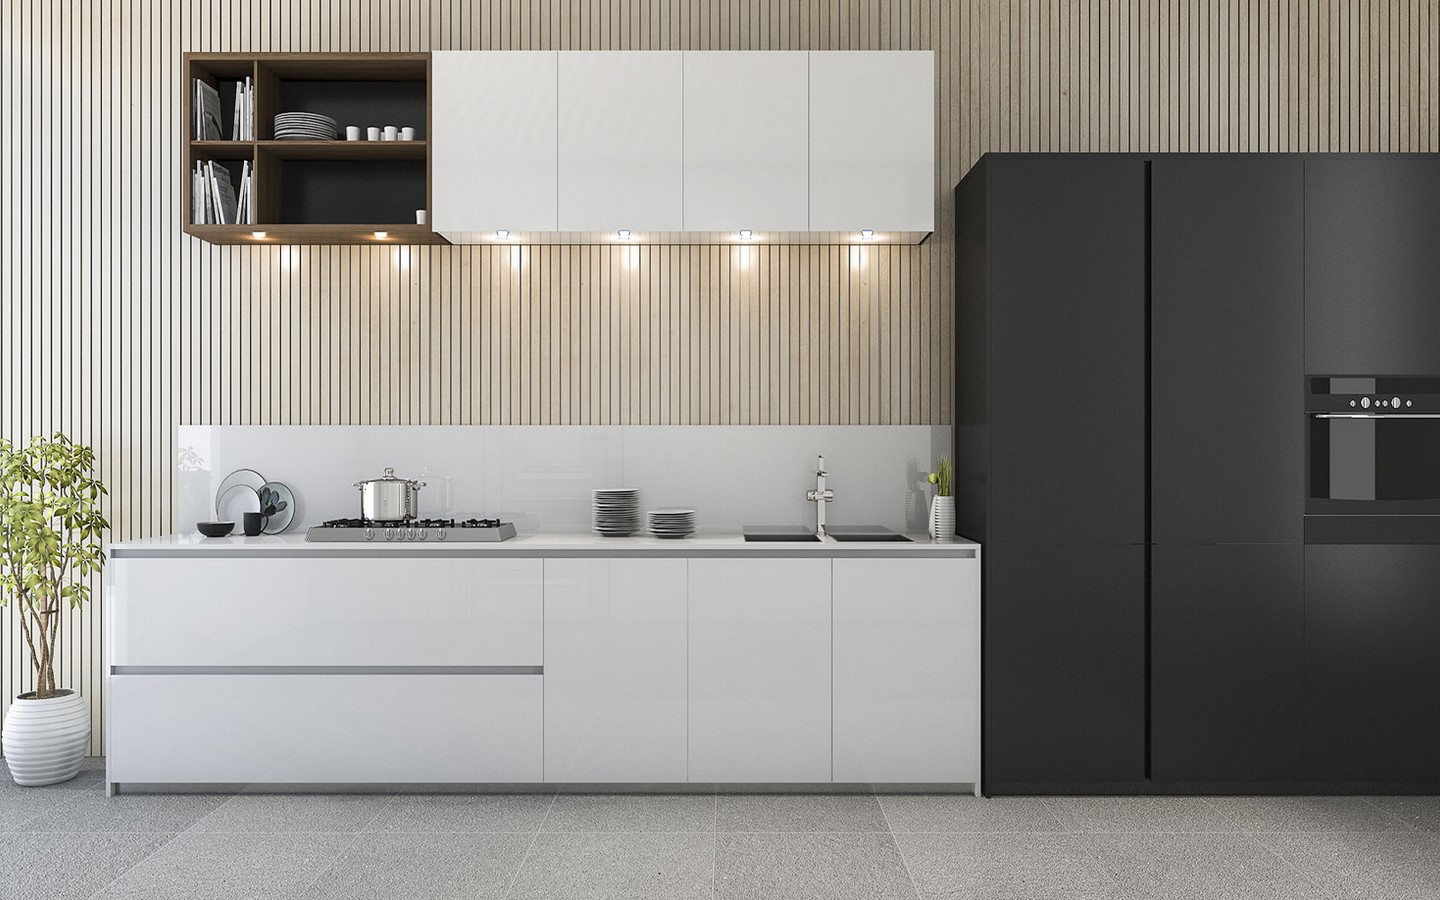 10 Semi Modular Kitchen Designs for your home - Sheet8